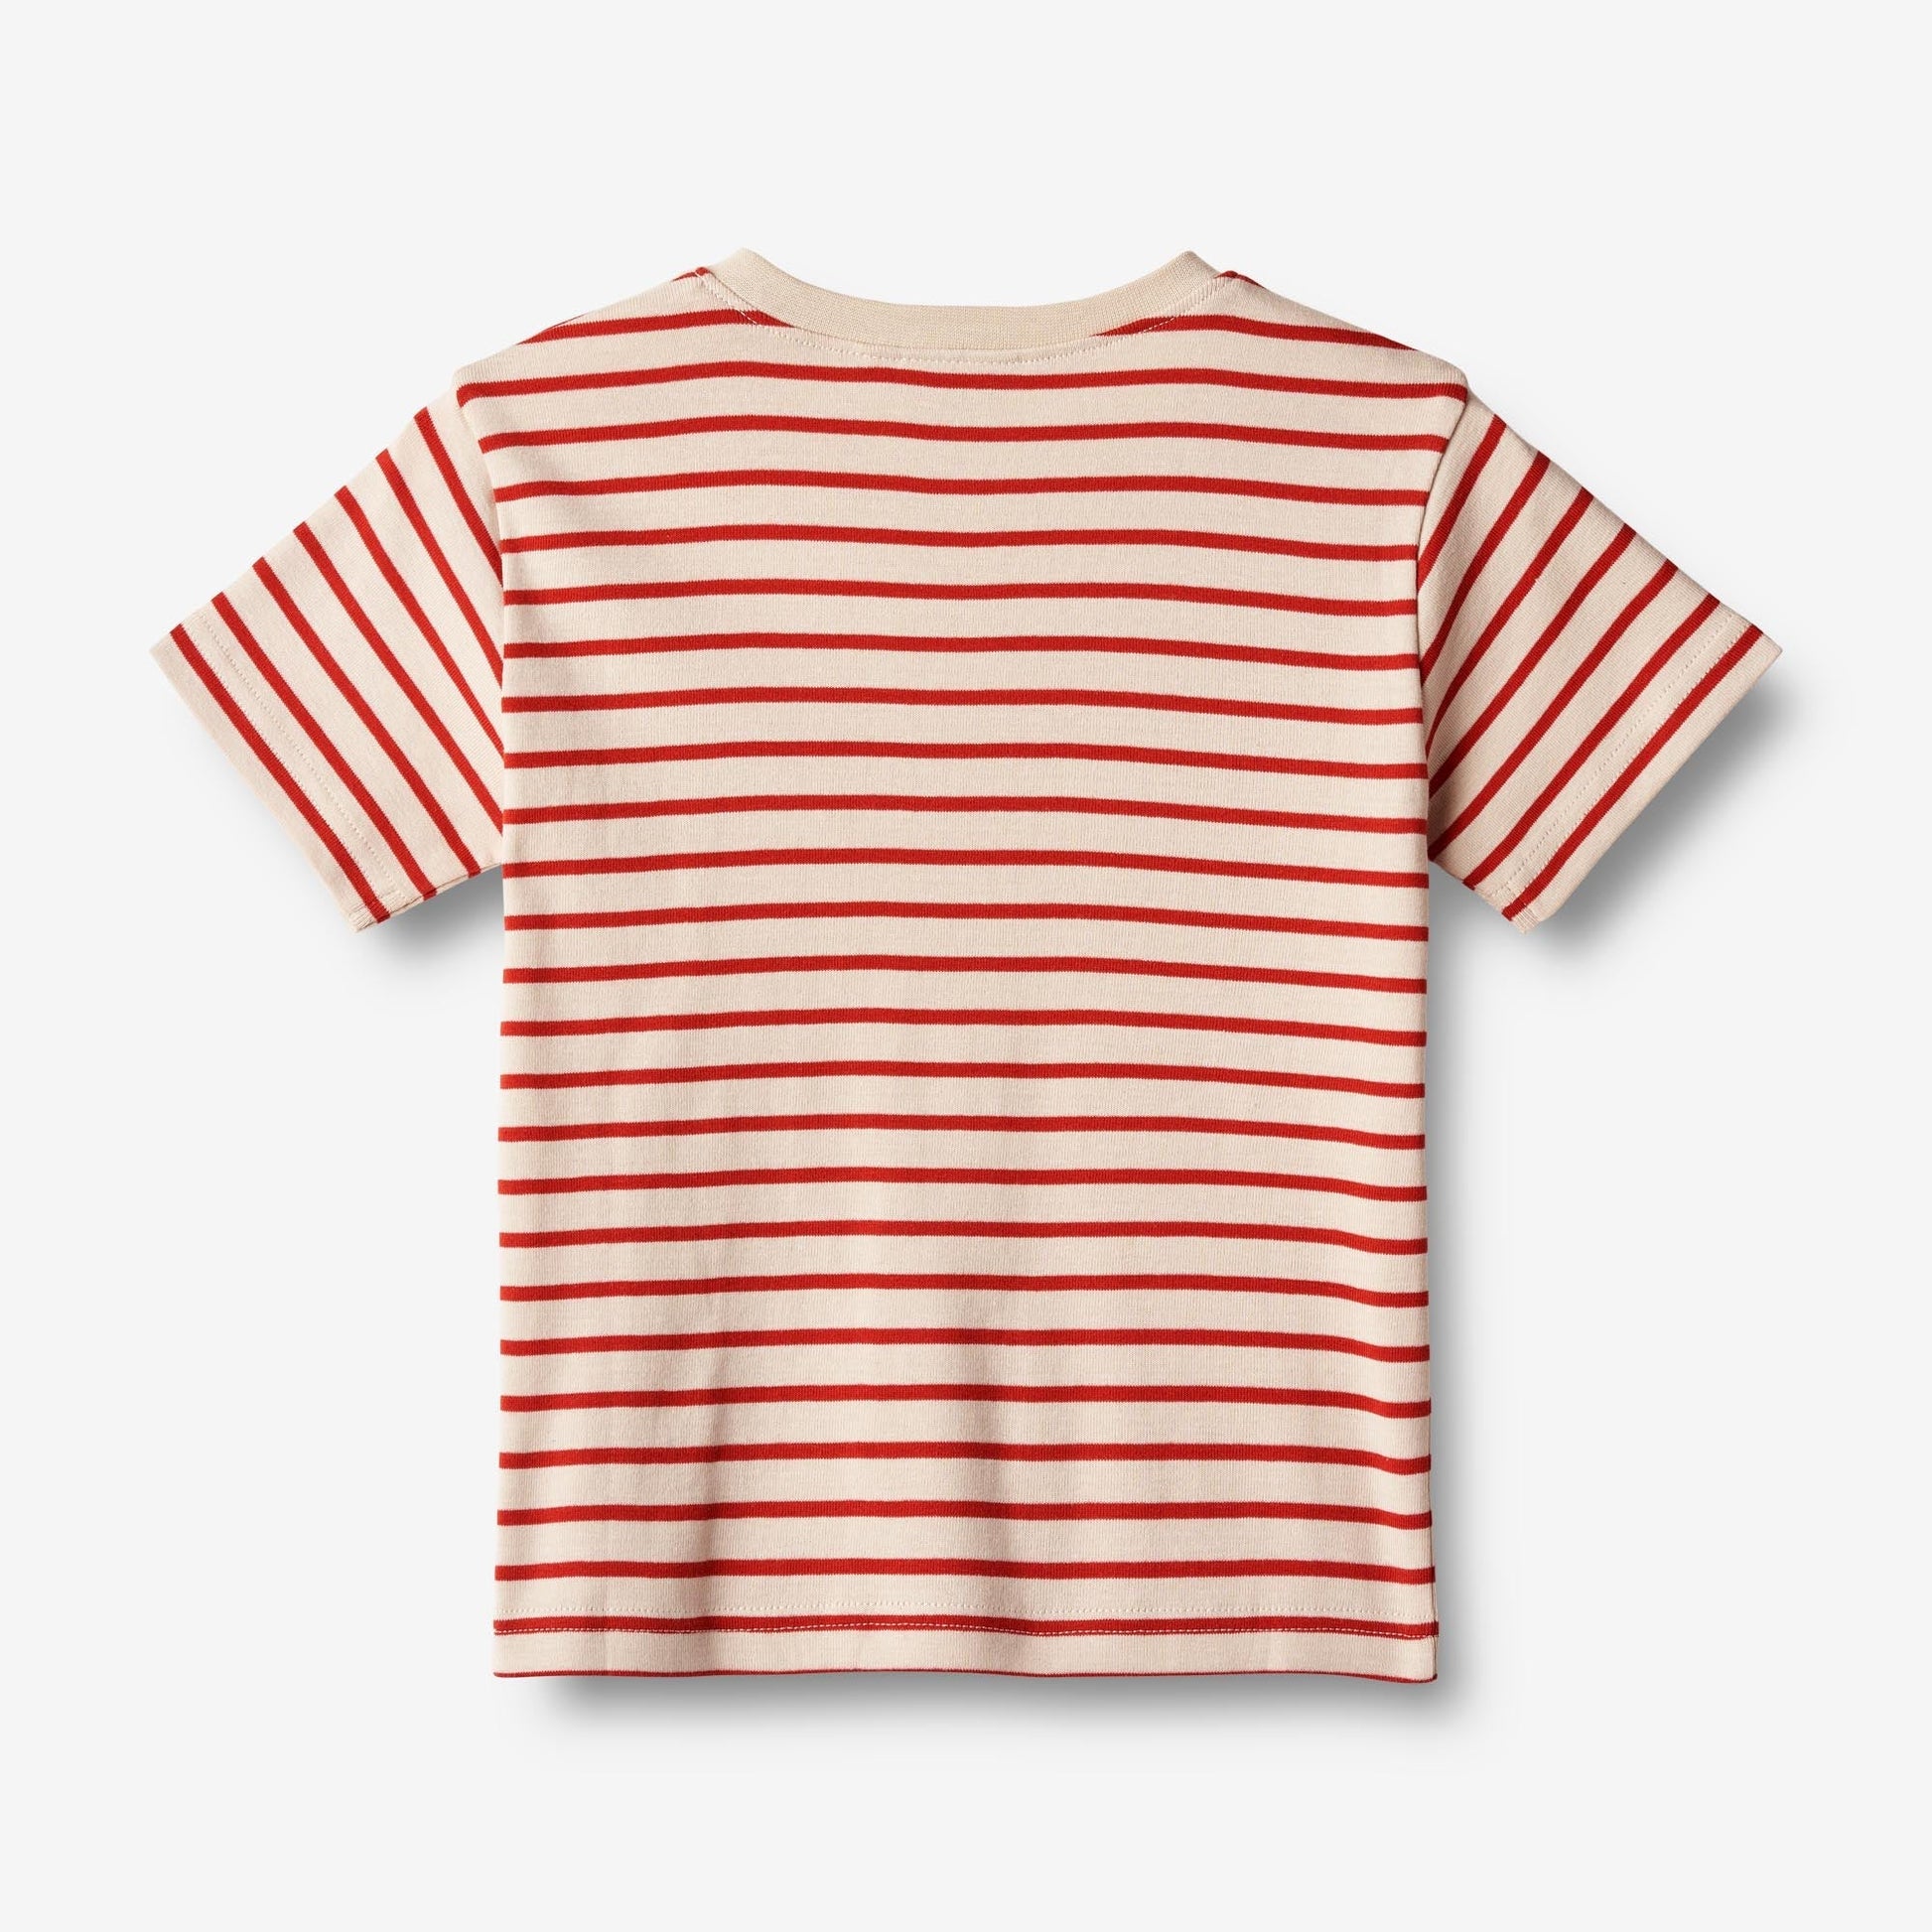 Wheat 'Fabian' Children's T-Shirt (2 Colours Available)